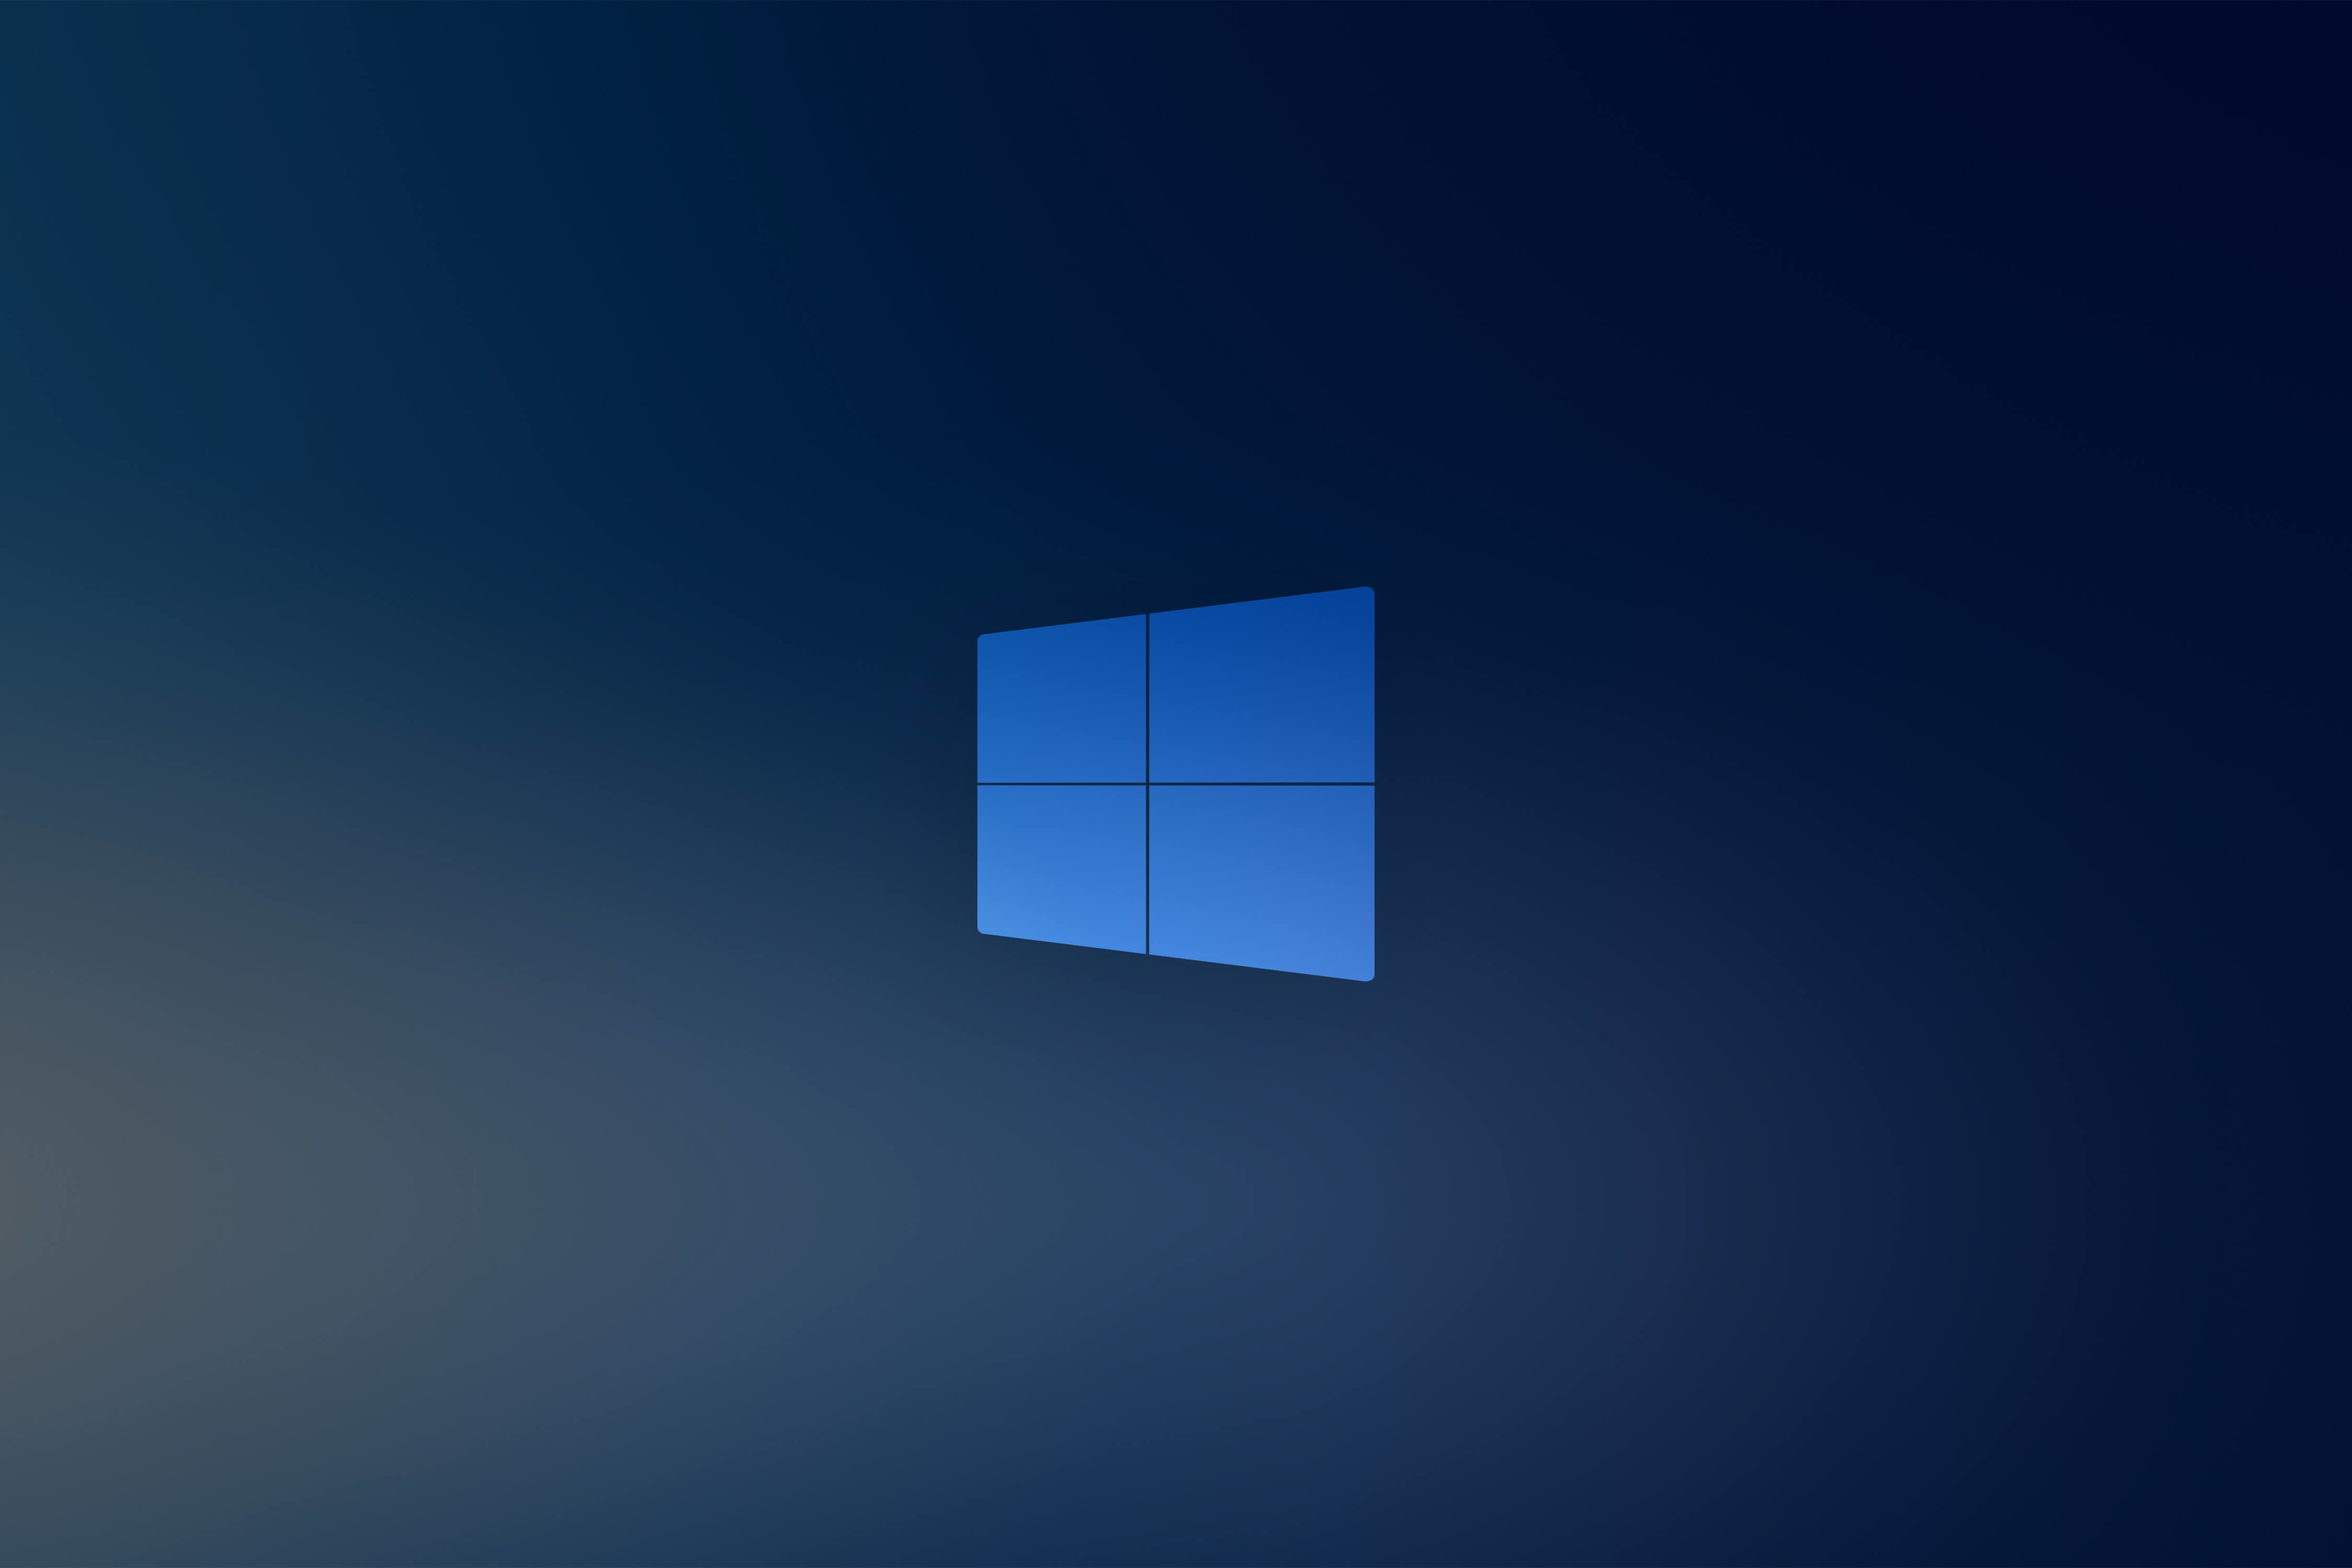 2560x1080 Windows 10x Blue Logo 2560x1080 Resolution Wallpaper Hd Hi Tech 4k Wallpapers Images Photos And Background Wallpapers Den